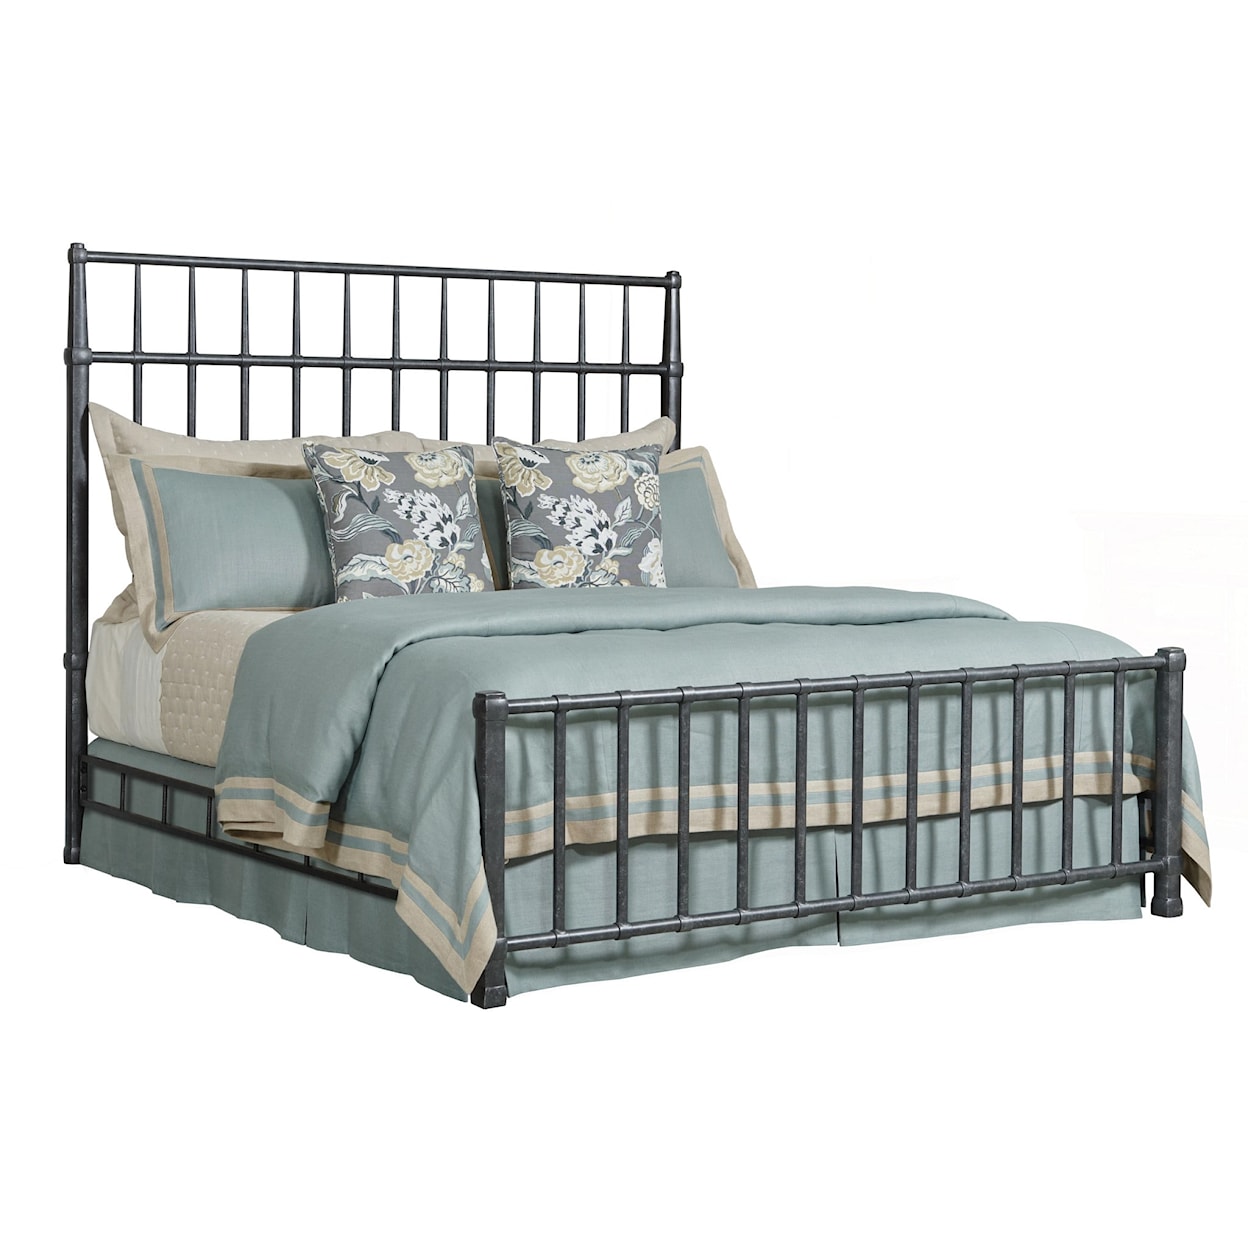 Kincaid Furniture Ansley Sylvan King Metal Bed Complete